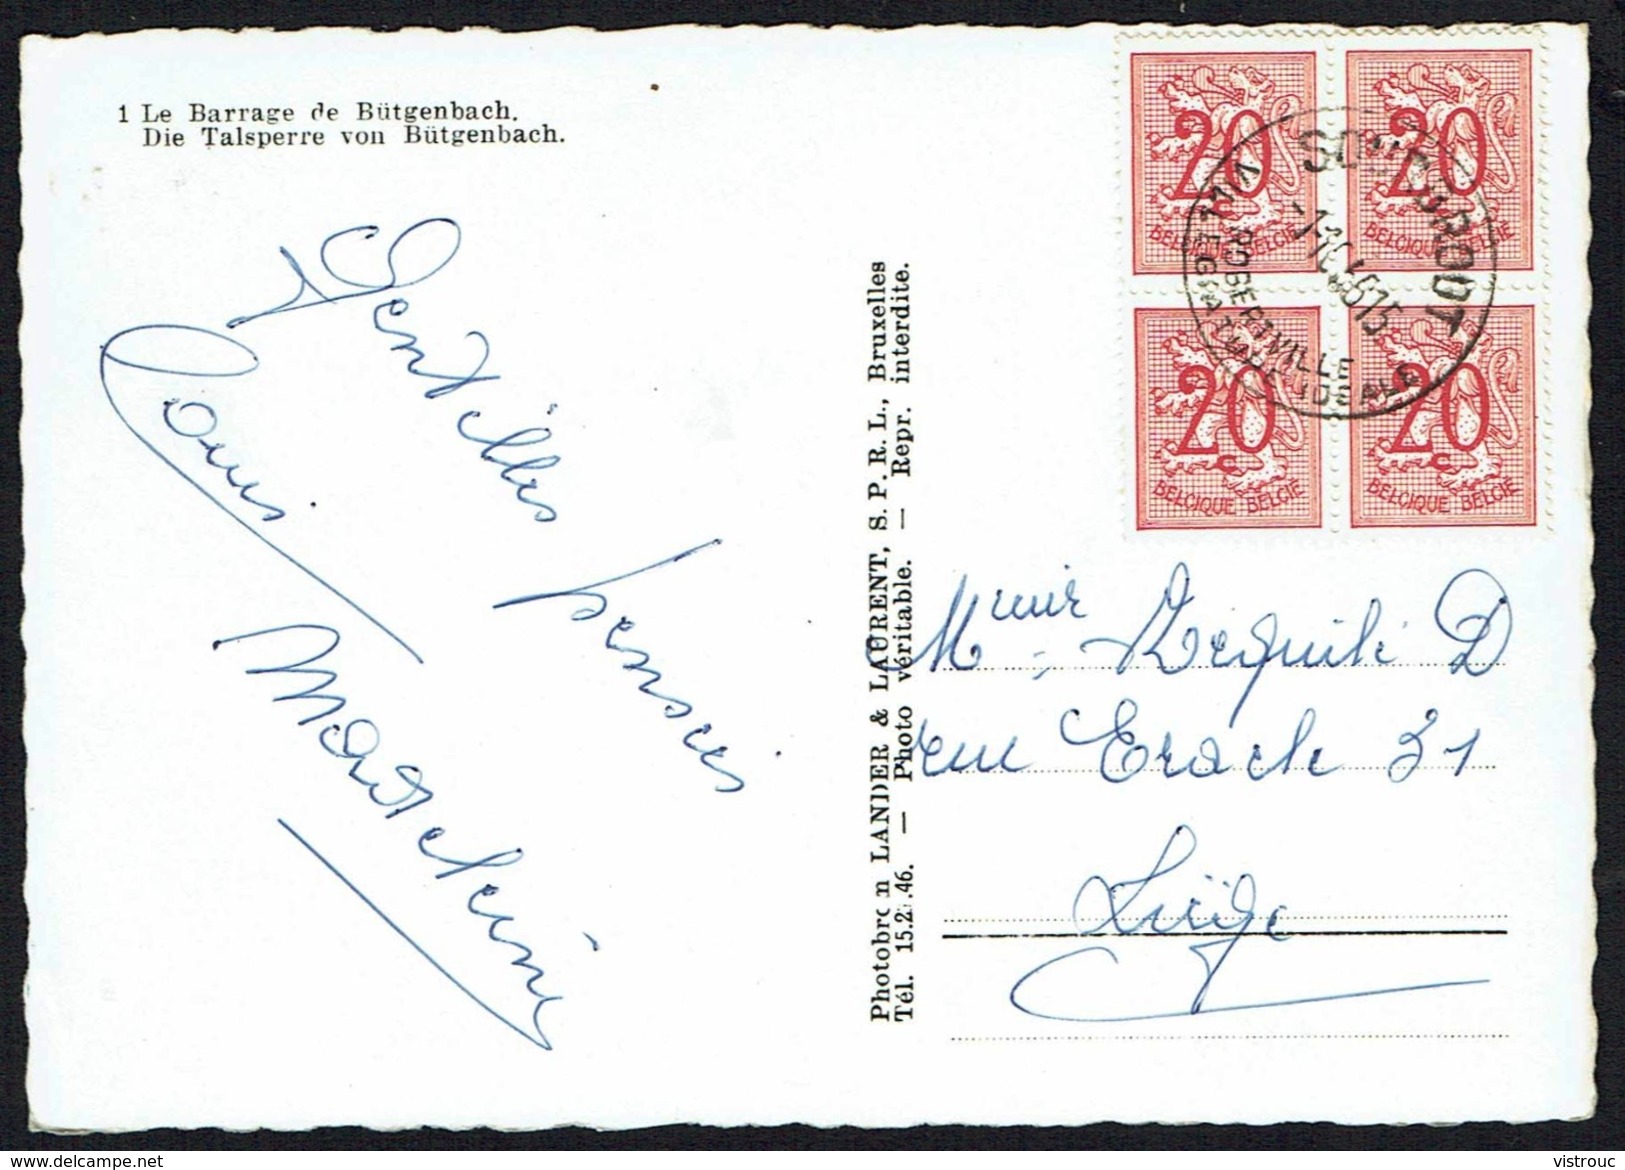 BÜTGENBACH - Le Barrage - Talsperre - Circulé - Circulated - Gelaufen - 1958. - Bütgenbach